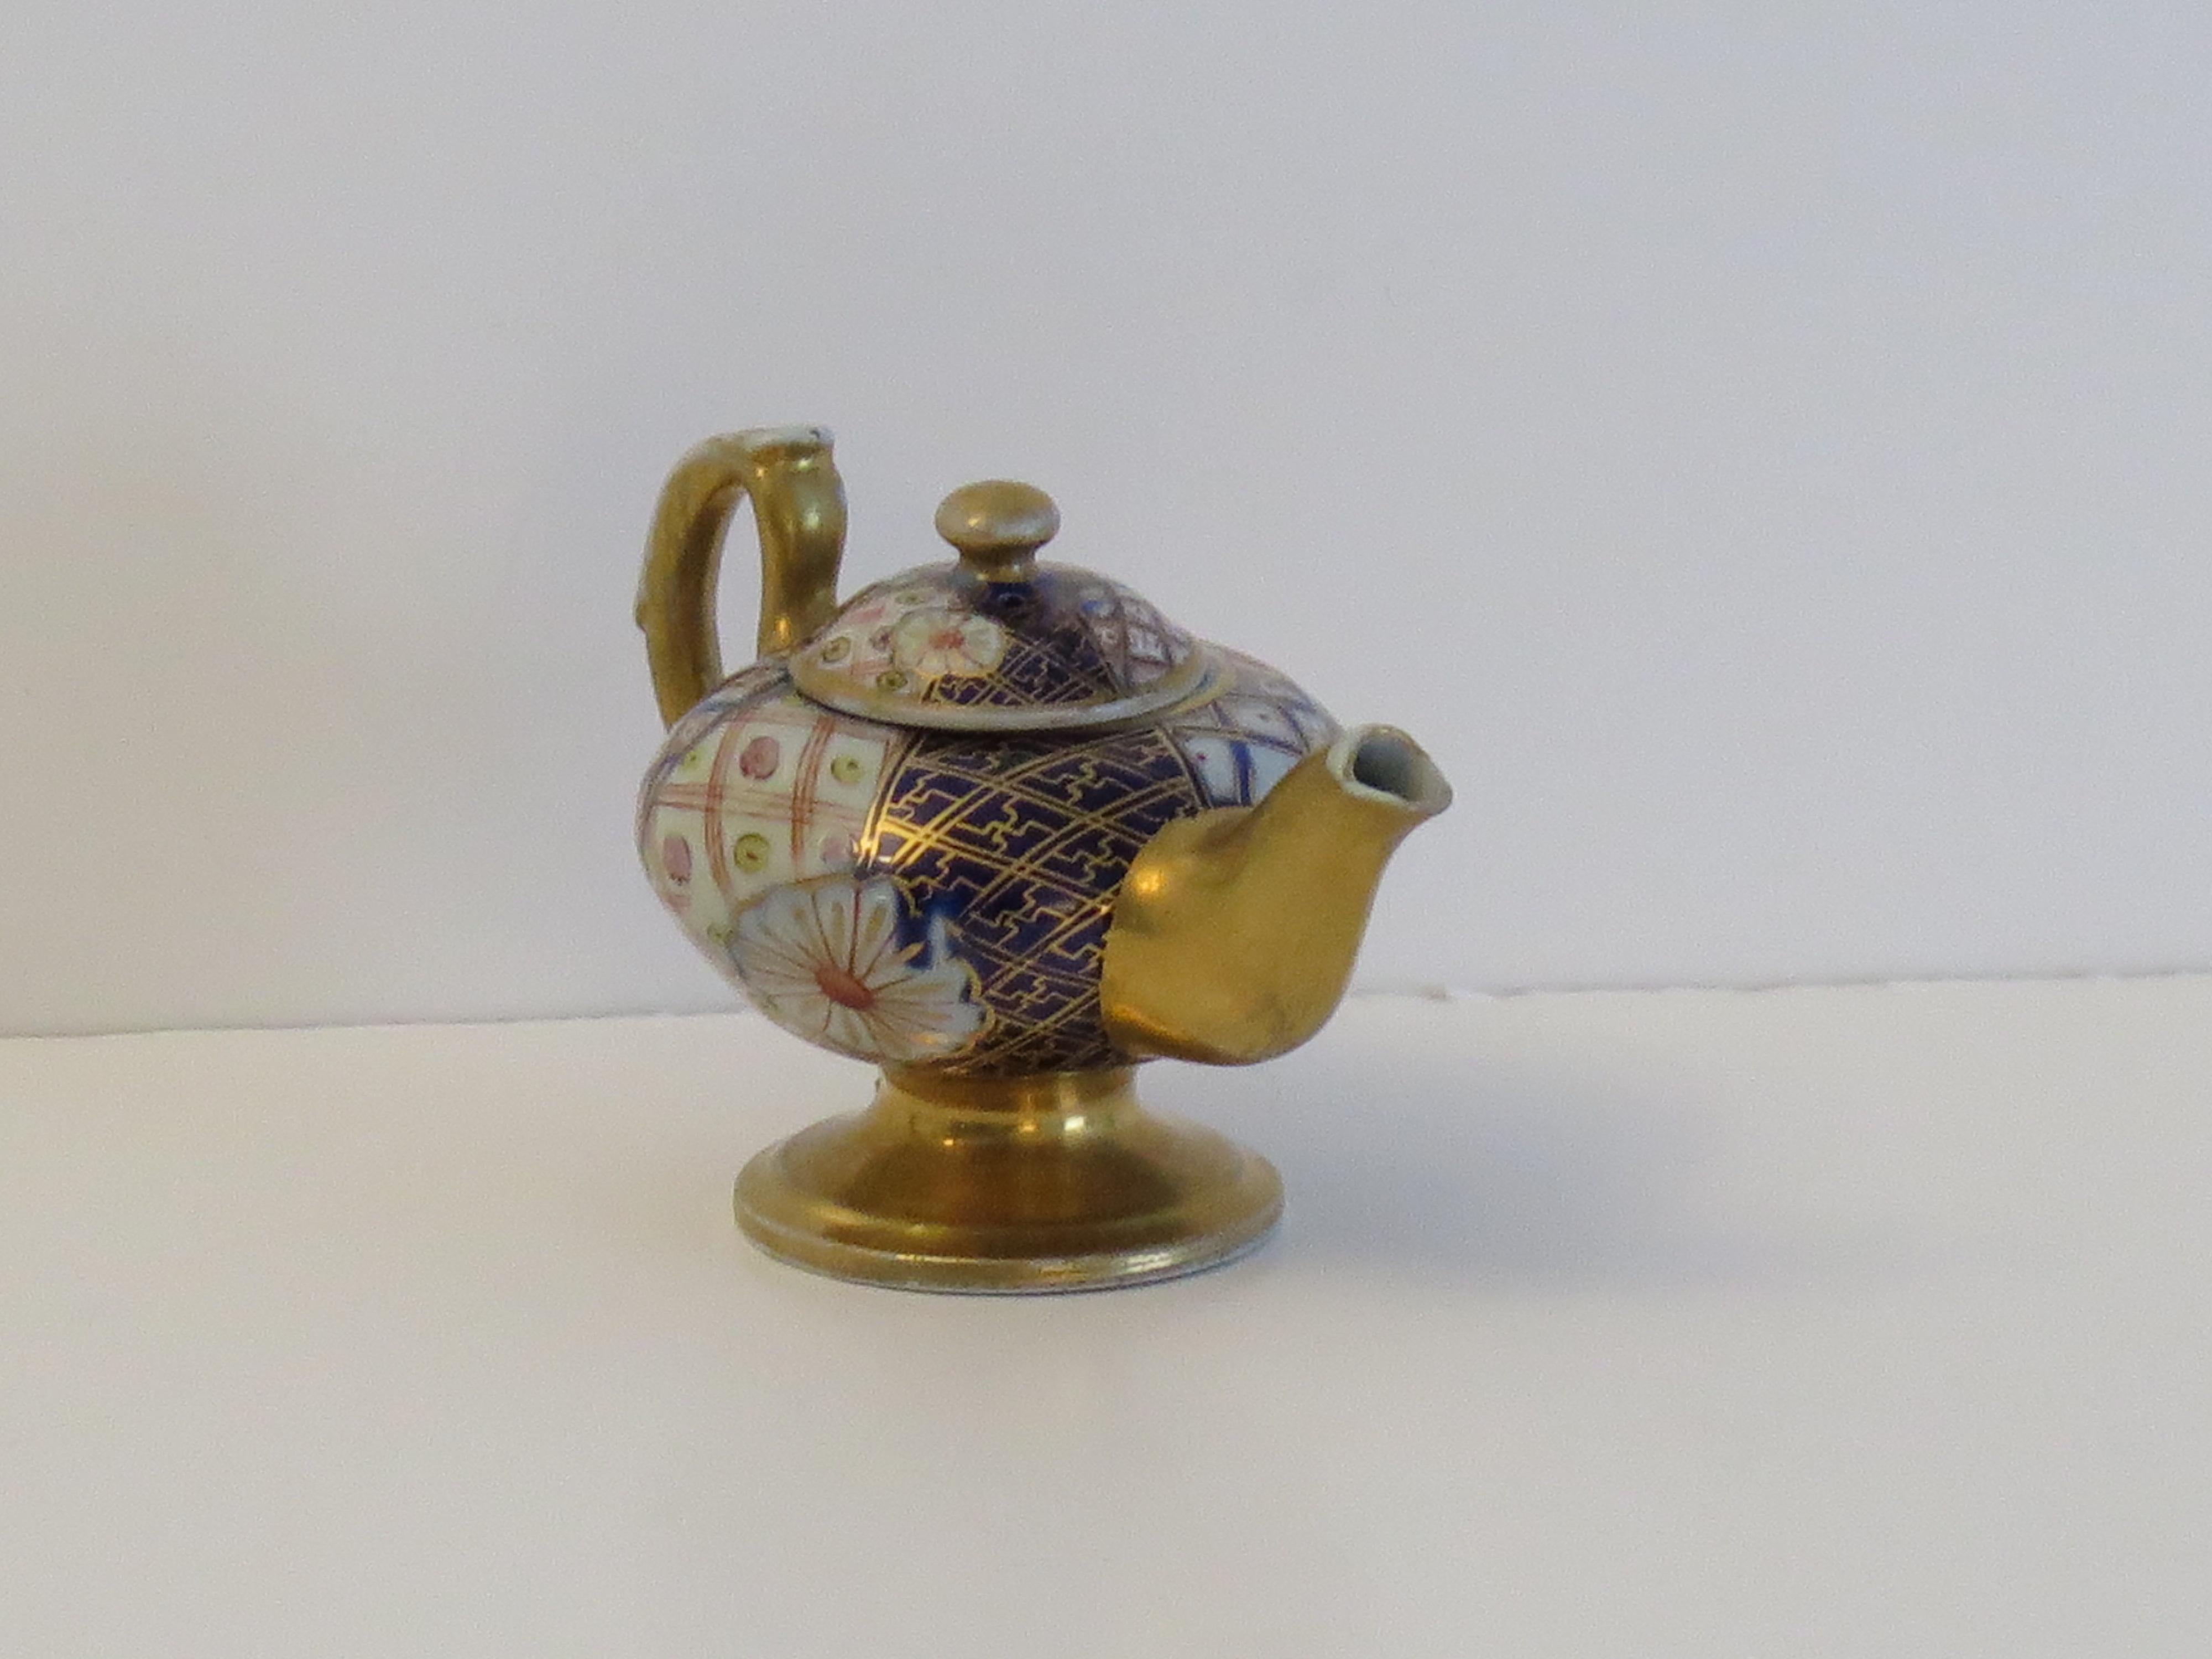 Rare Mason's Ironstone Miniature Teapot in Plaid Japan rare Pattern, circa 1820 For Sale 5